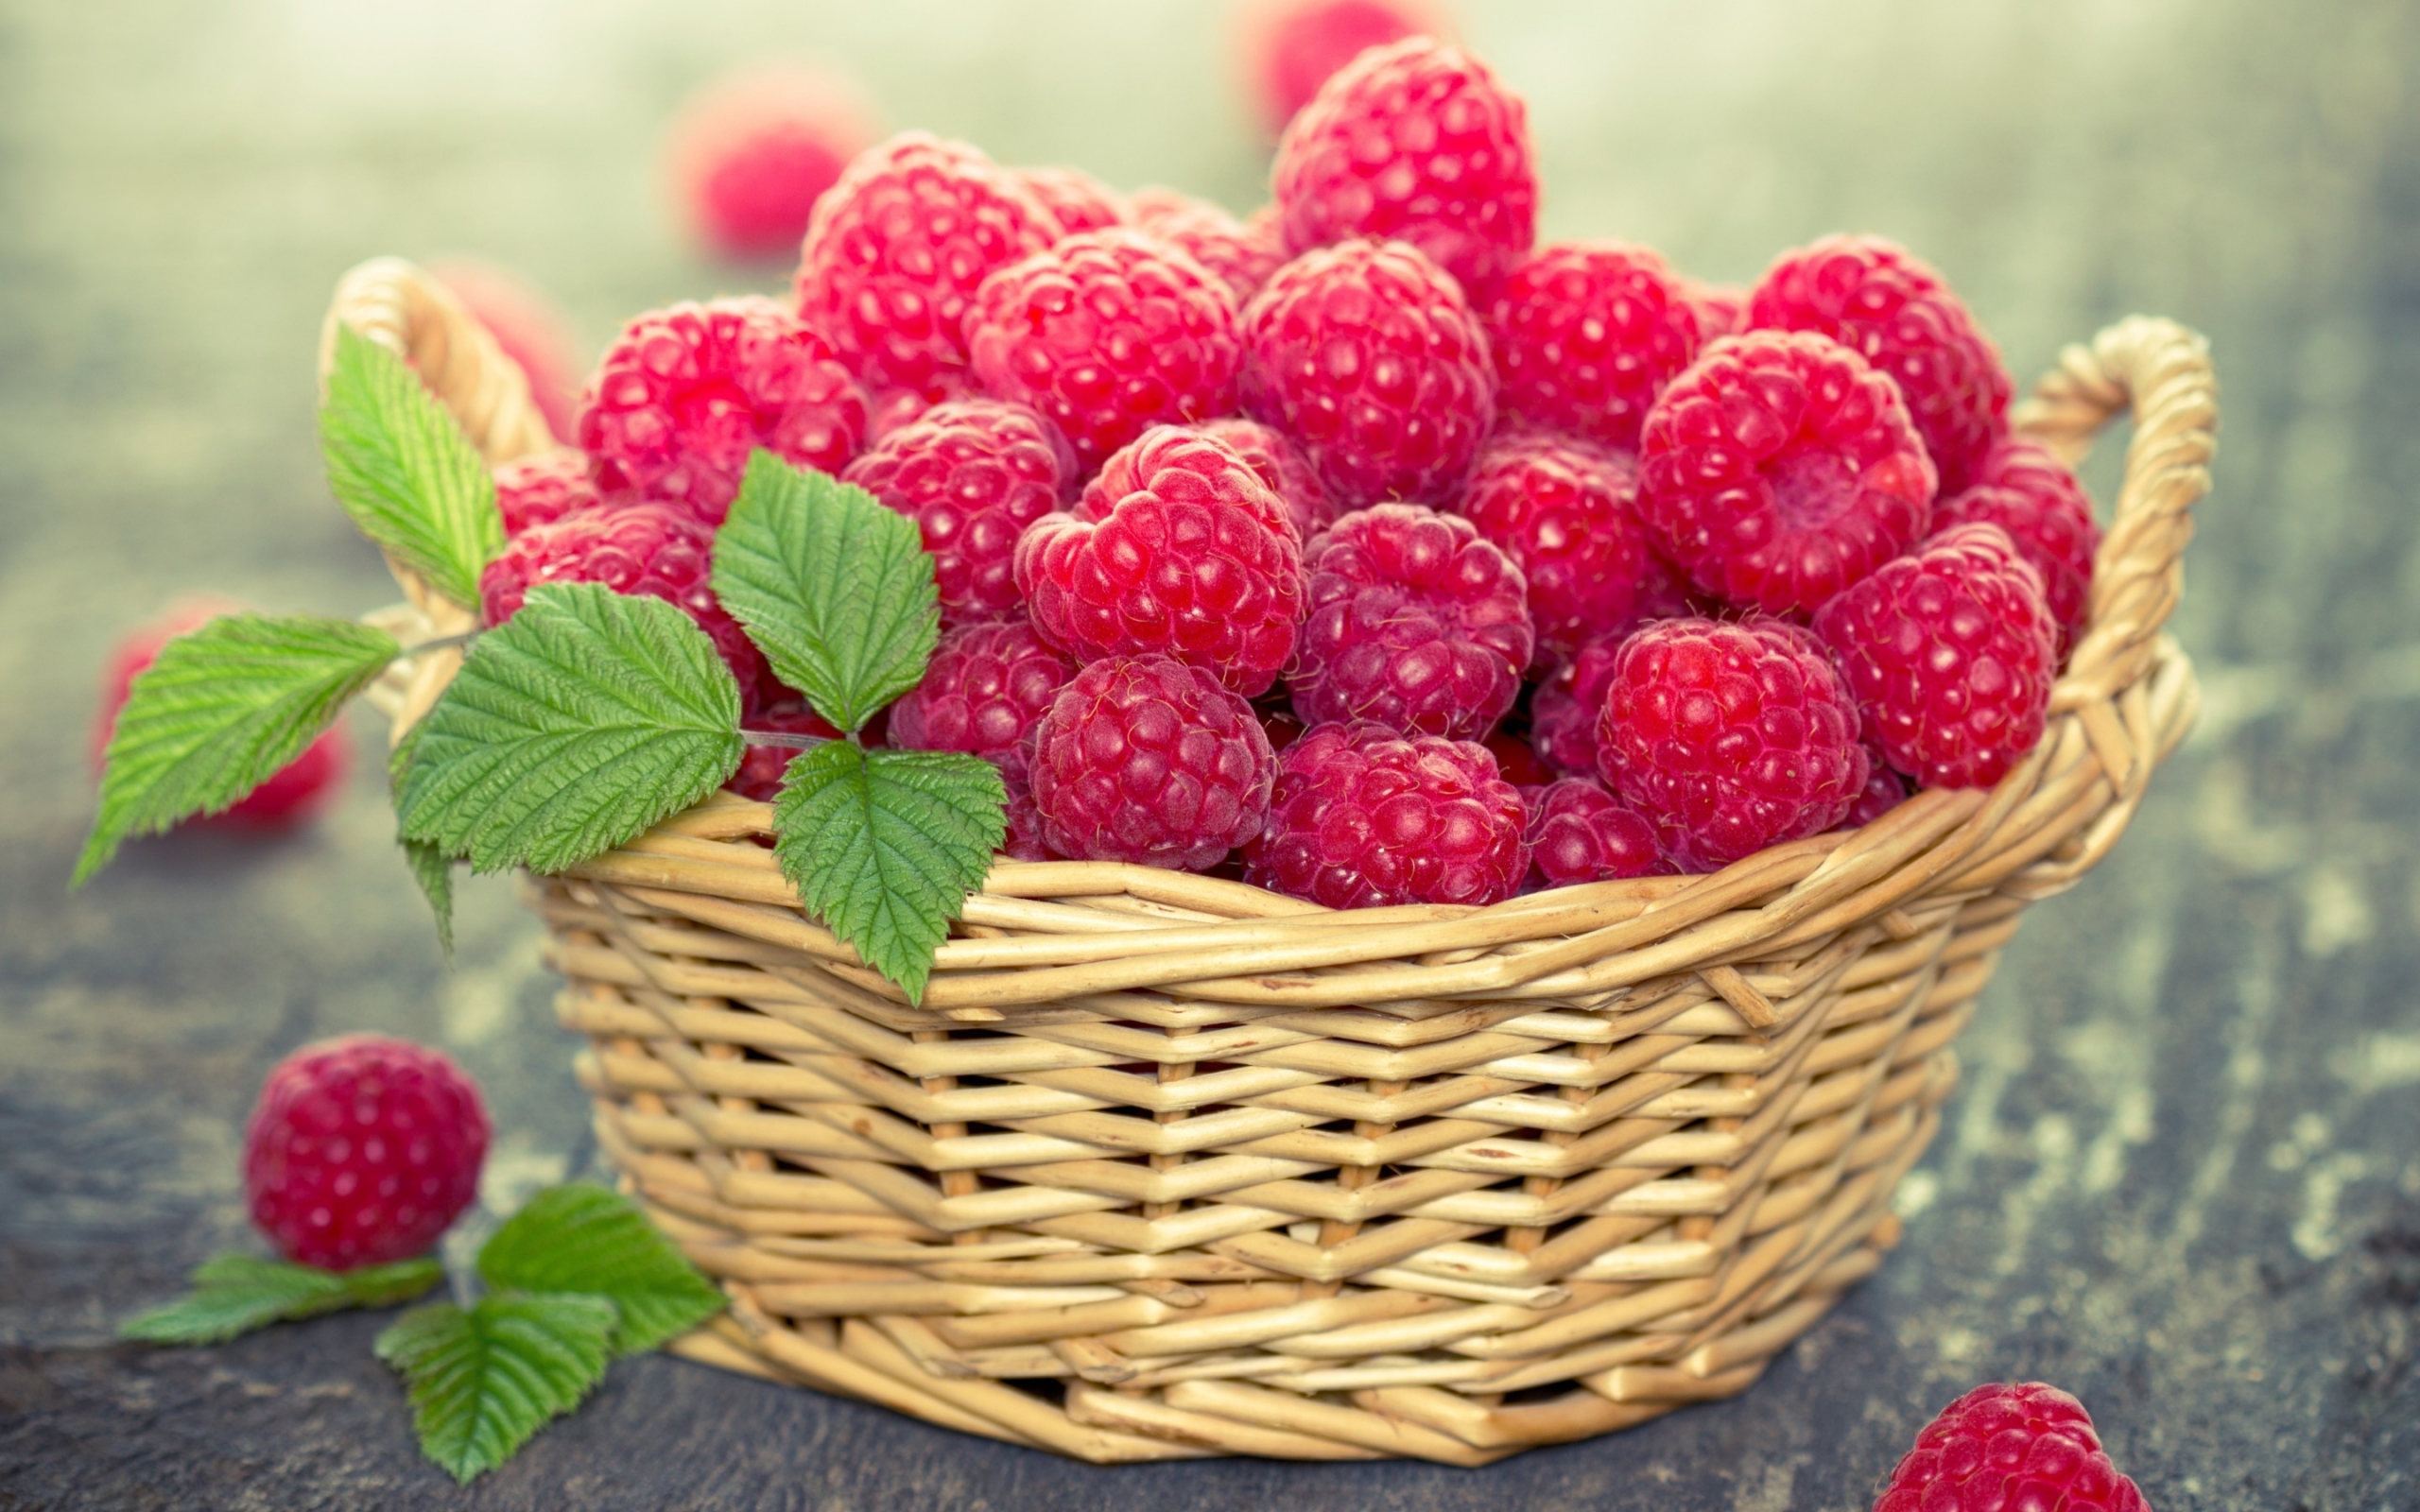 Basket of Raspberries for 2560 x 1600 widescreen resolution